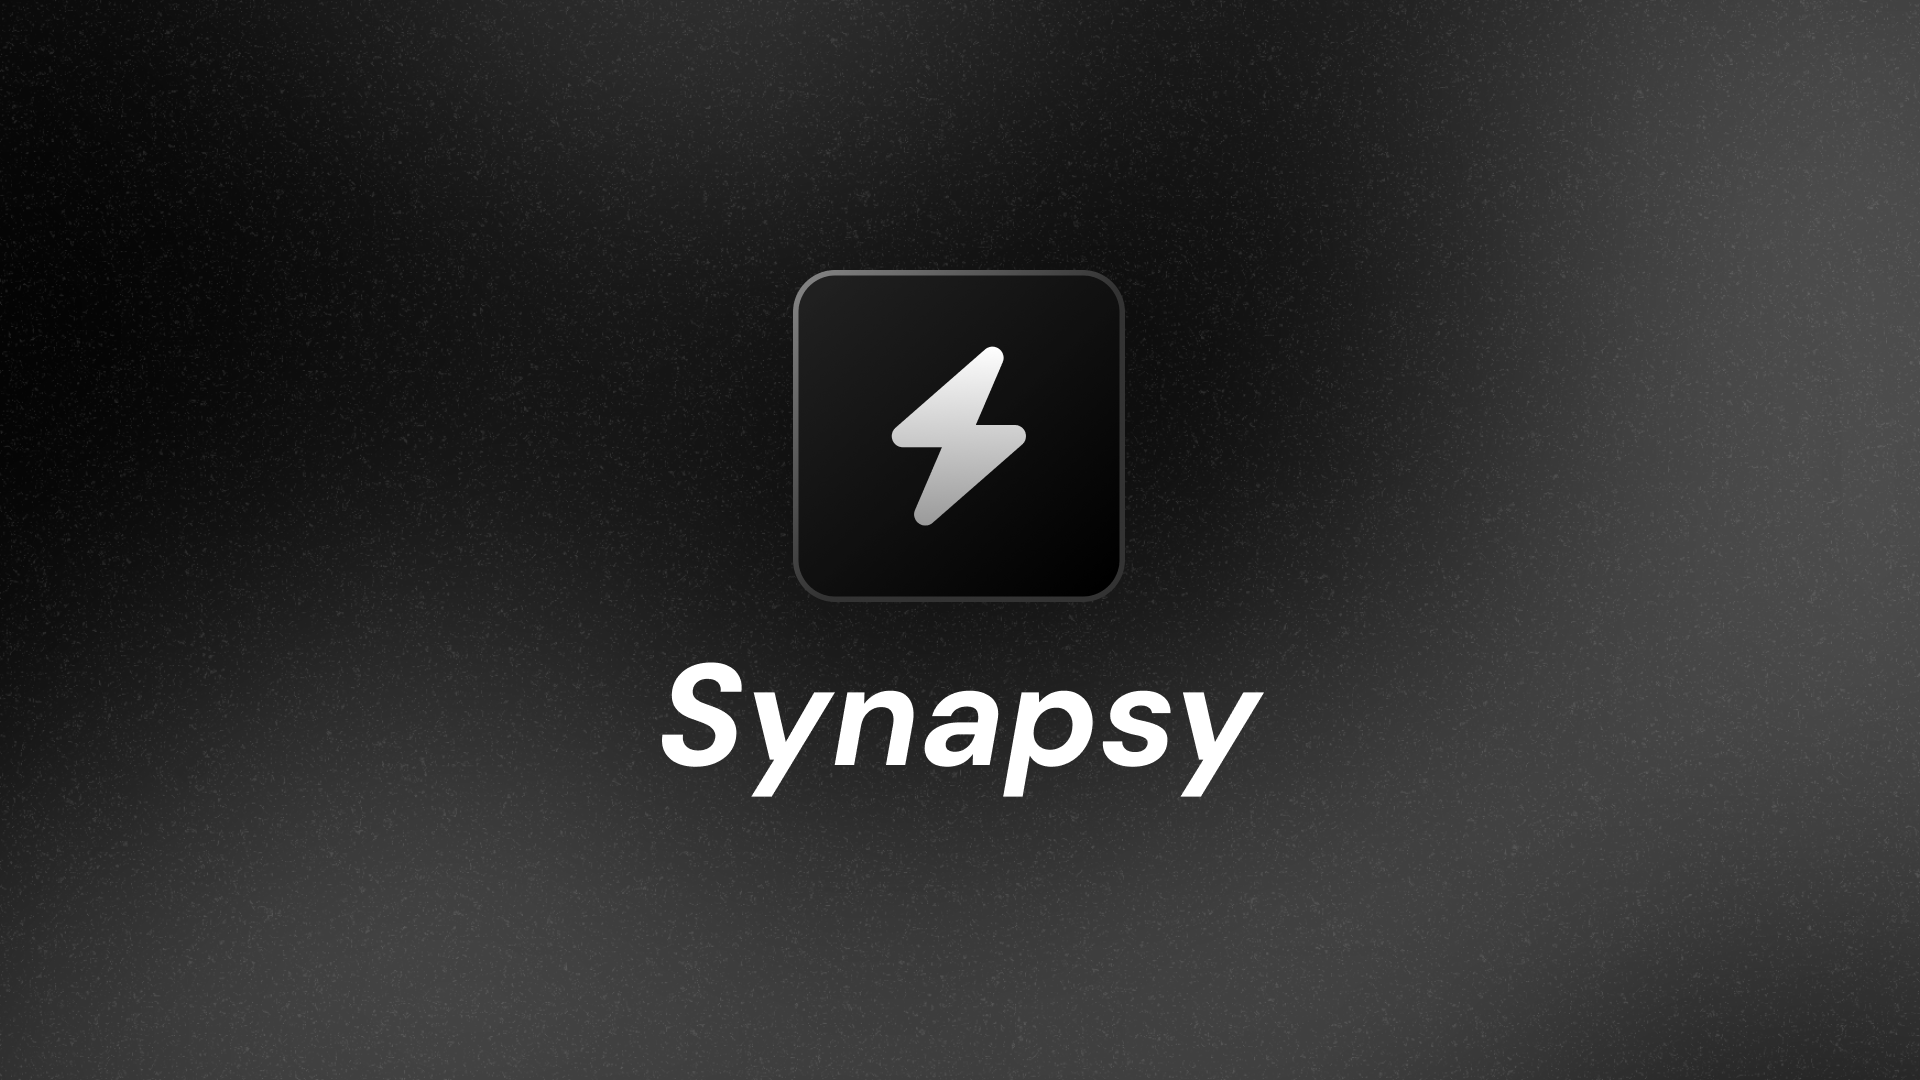 Introducing Synapsy